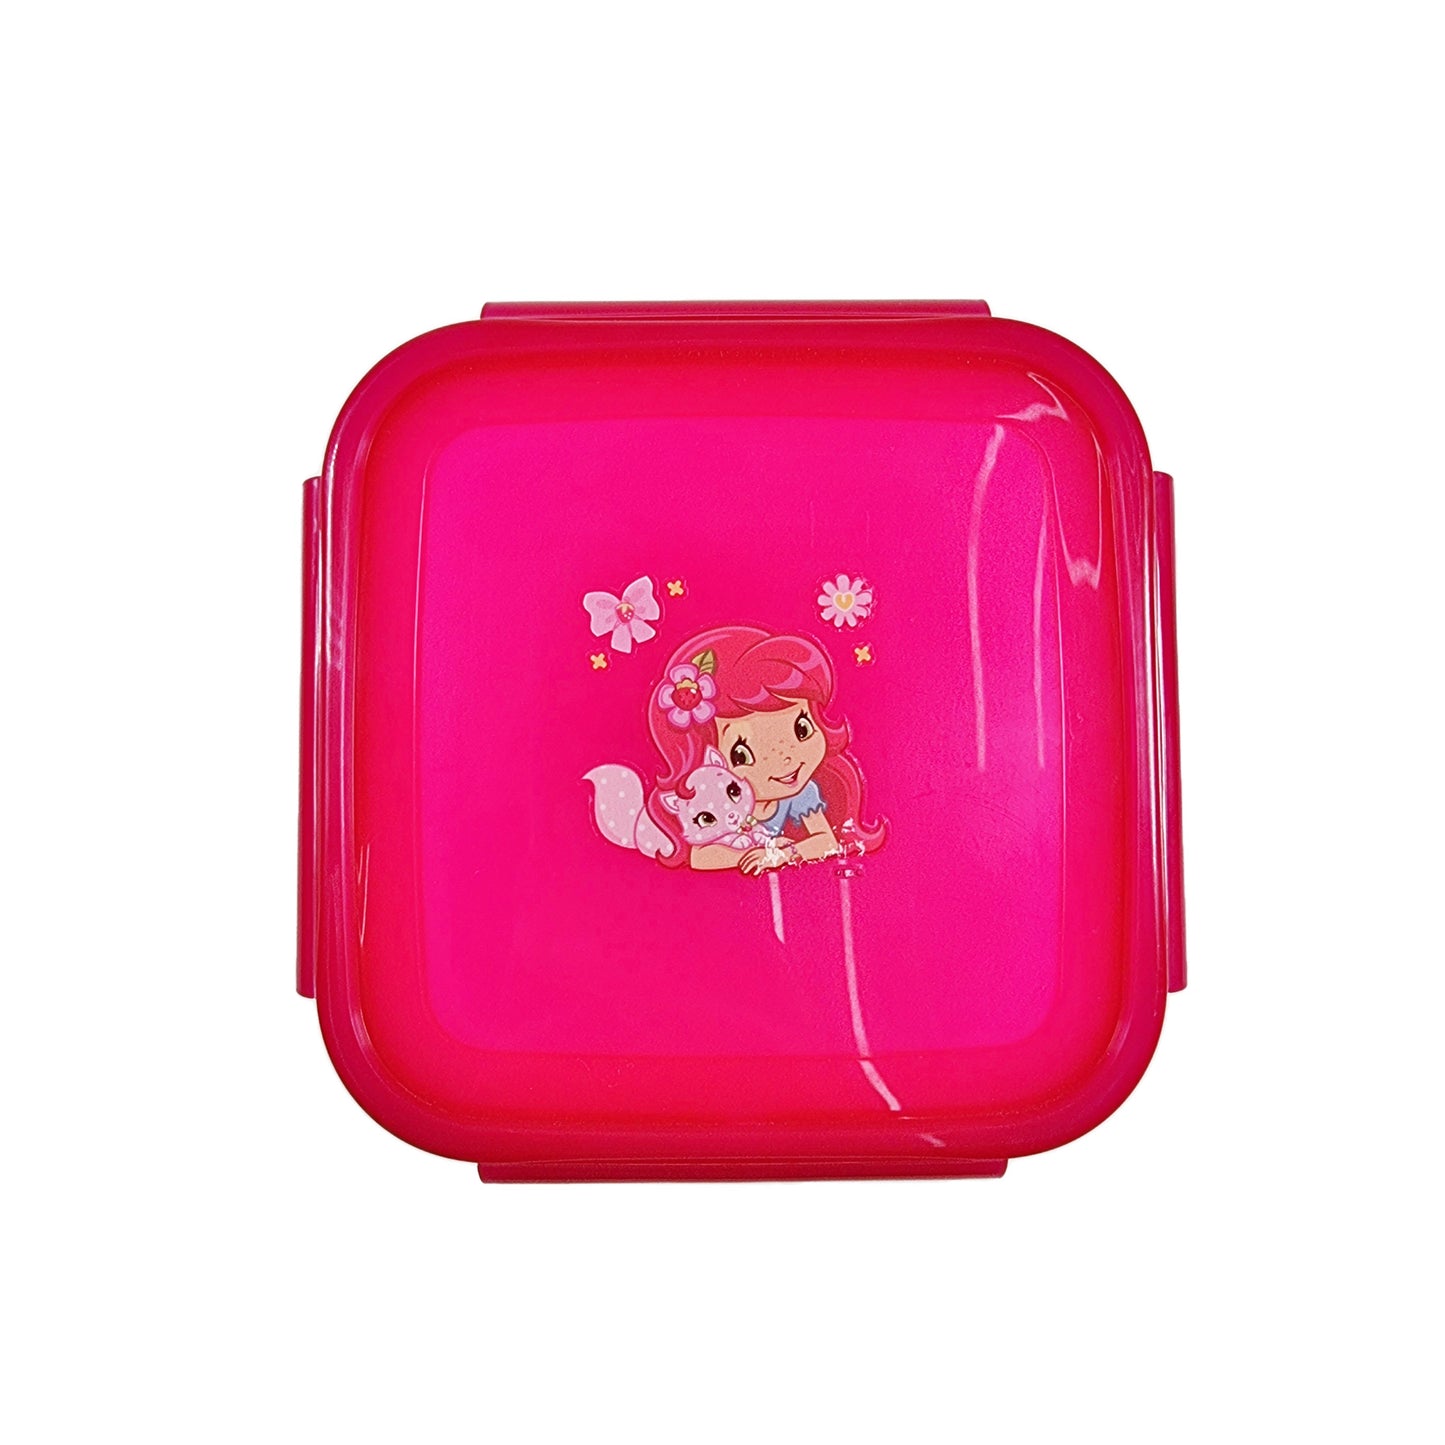 Strawberry Shortcake - Square Snap-lock Lunch Sandwich Box (500ml)